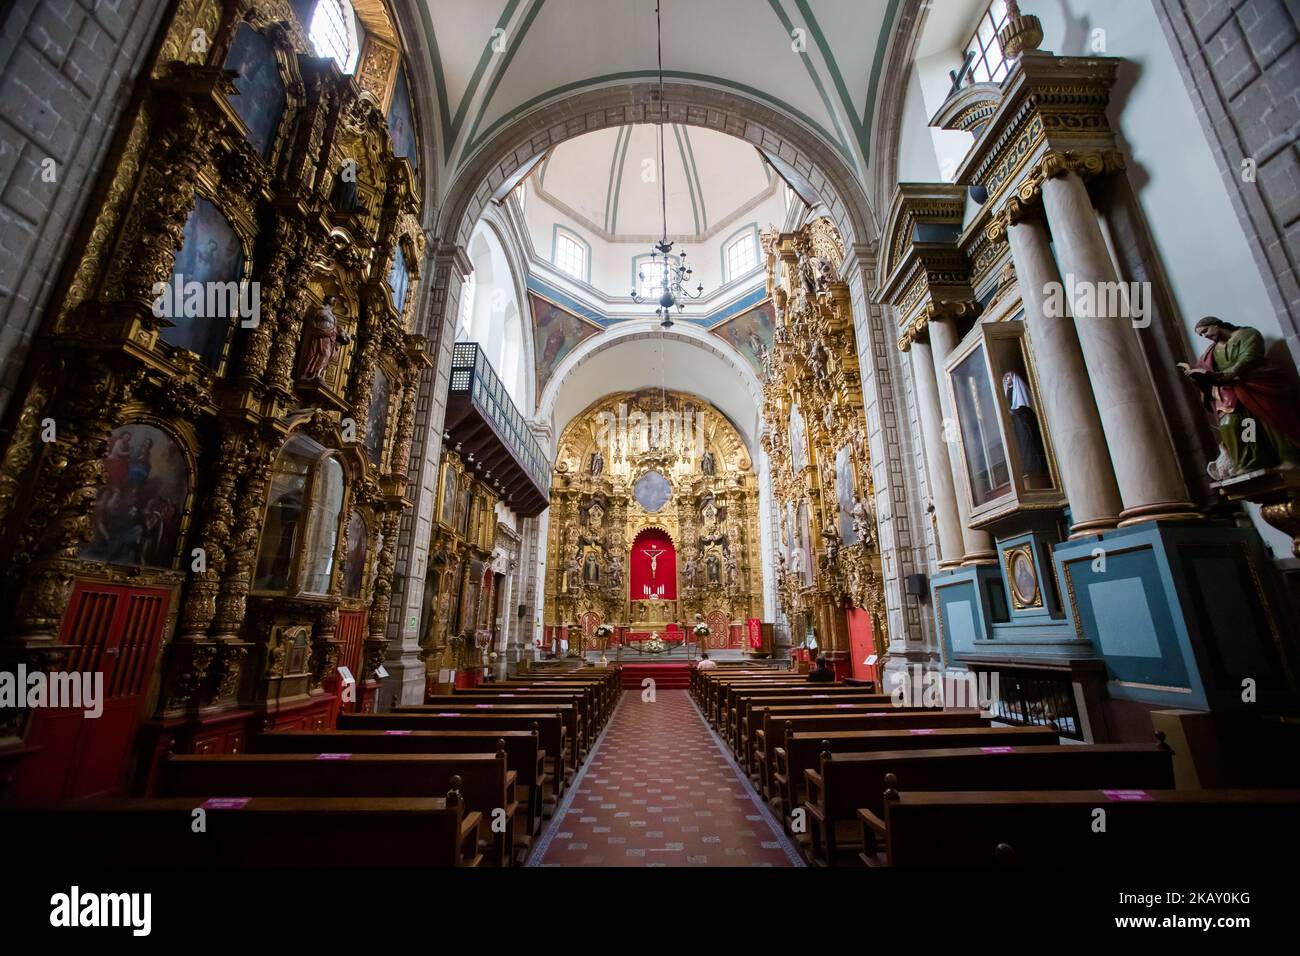 Bella architettura della Chiesa Convento Regina Coeli a Ciudad de Mexico. Foto Stock